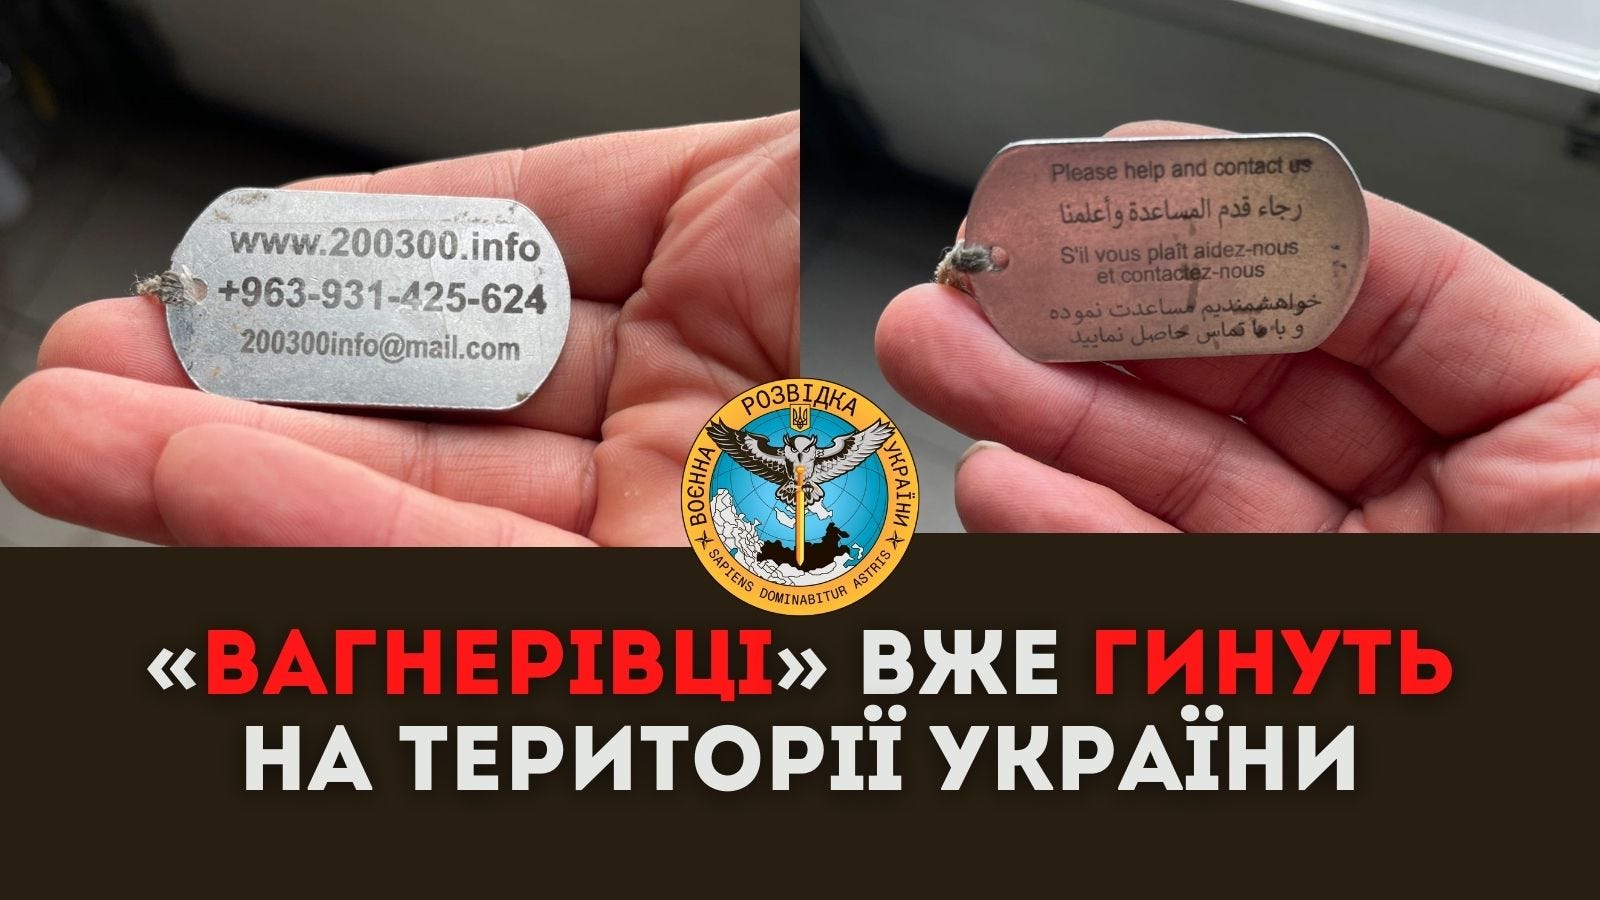 Photo of dog tags that Ukraine says belong to Wagner Group mercenaries